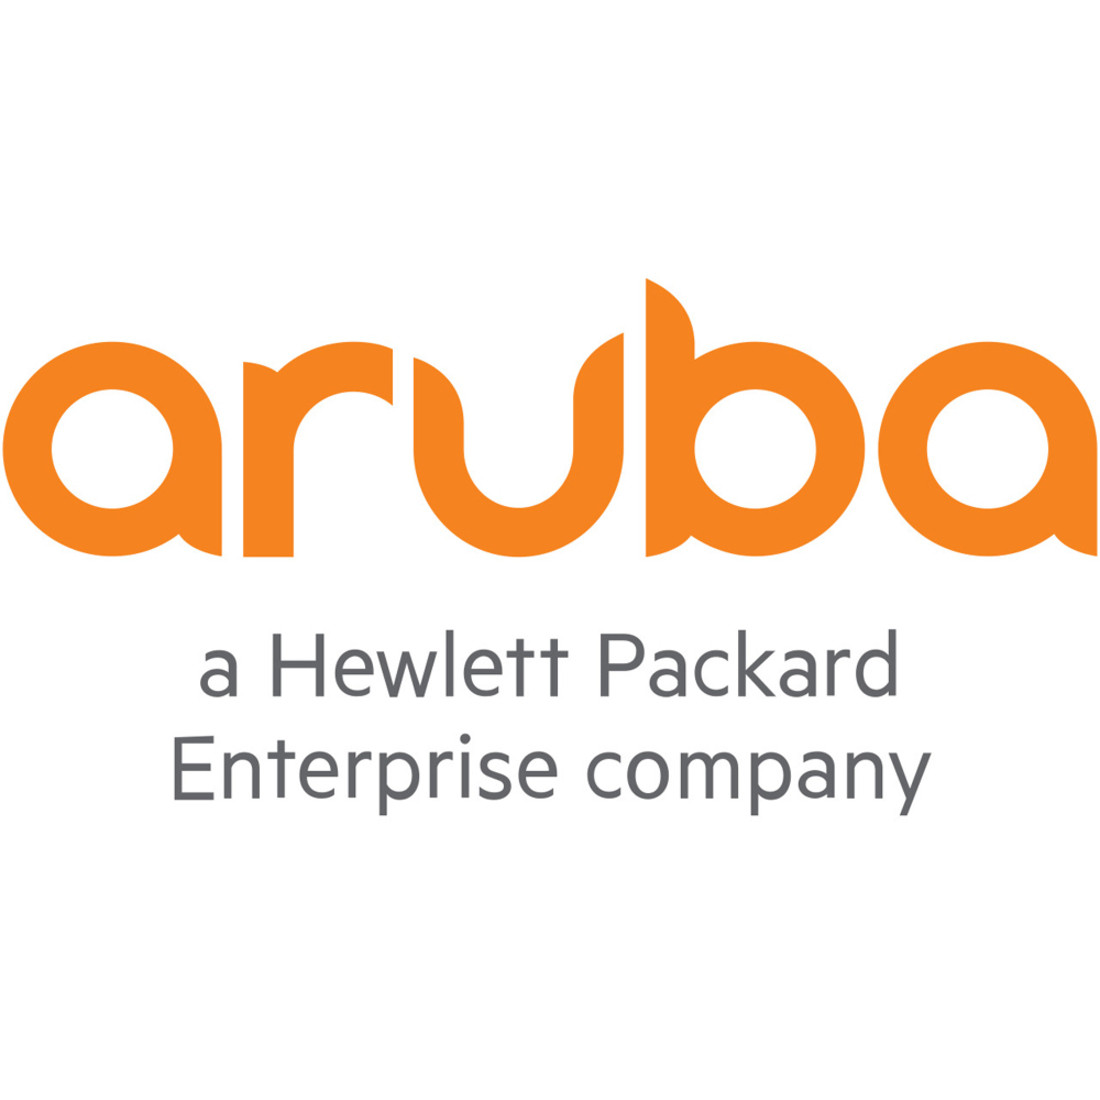 Aruba ClearPass OnGuardSubscription License100000 EndpointElectronicPC, Mac JZ498AAE